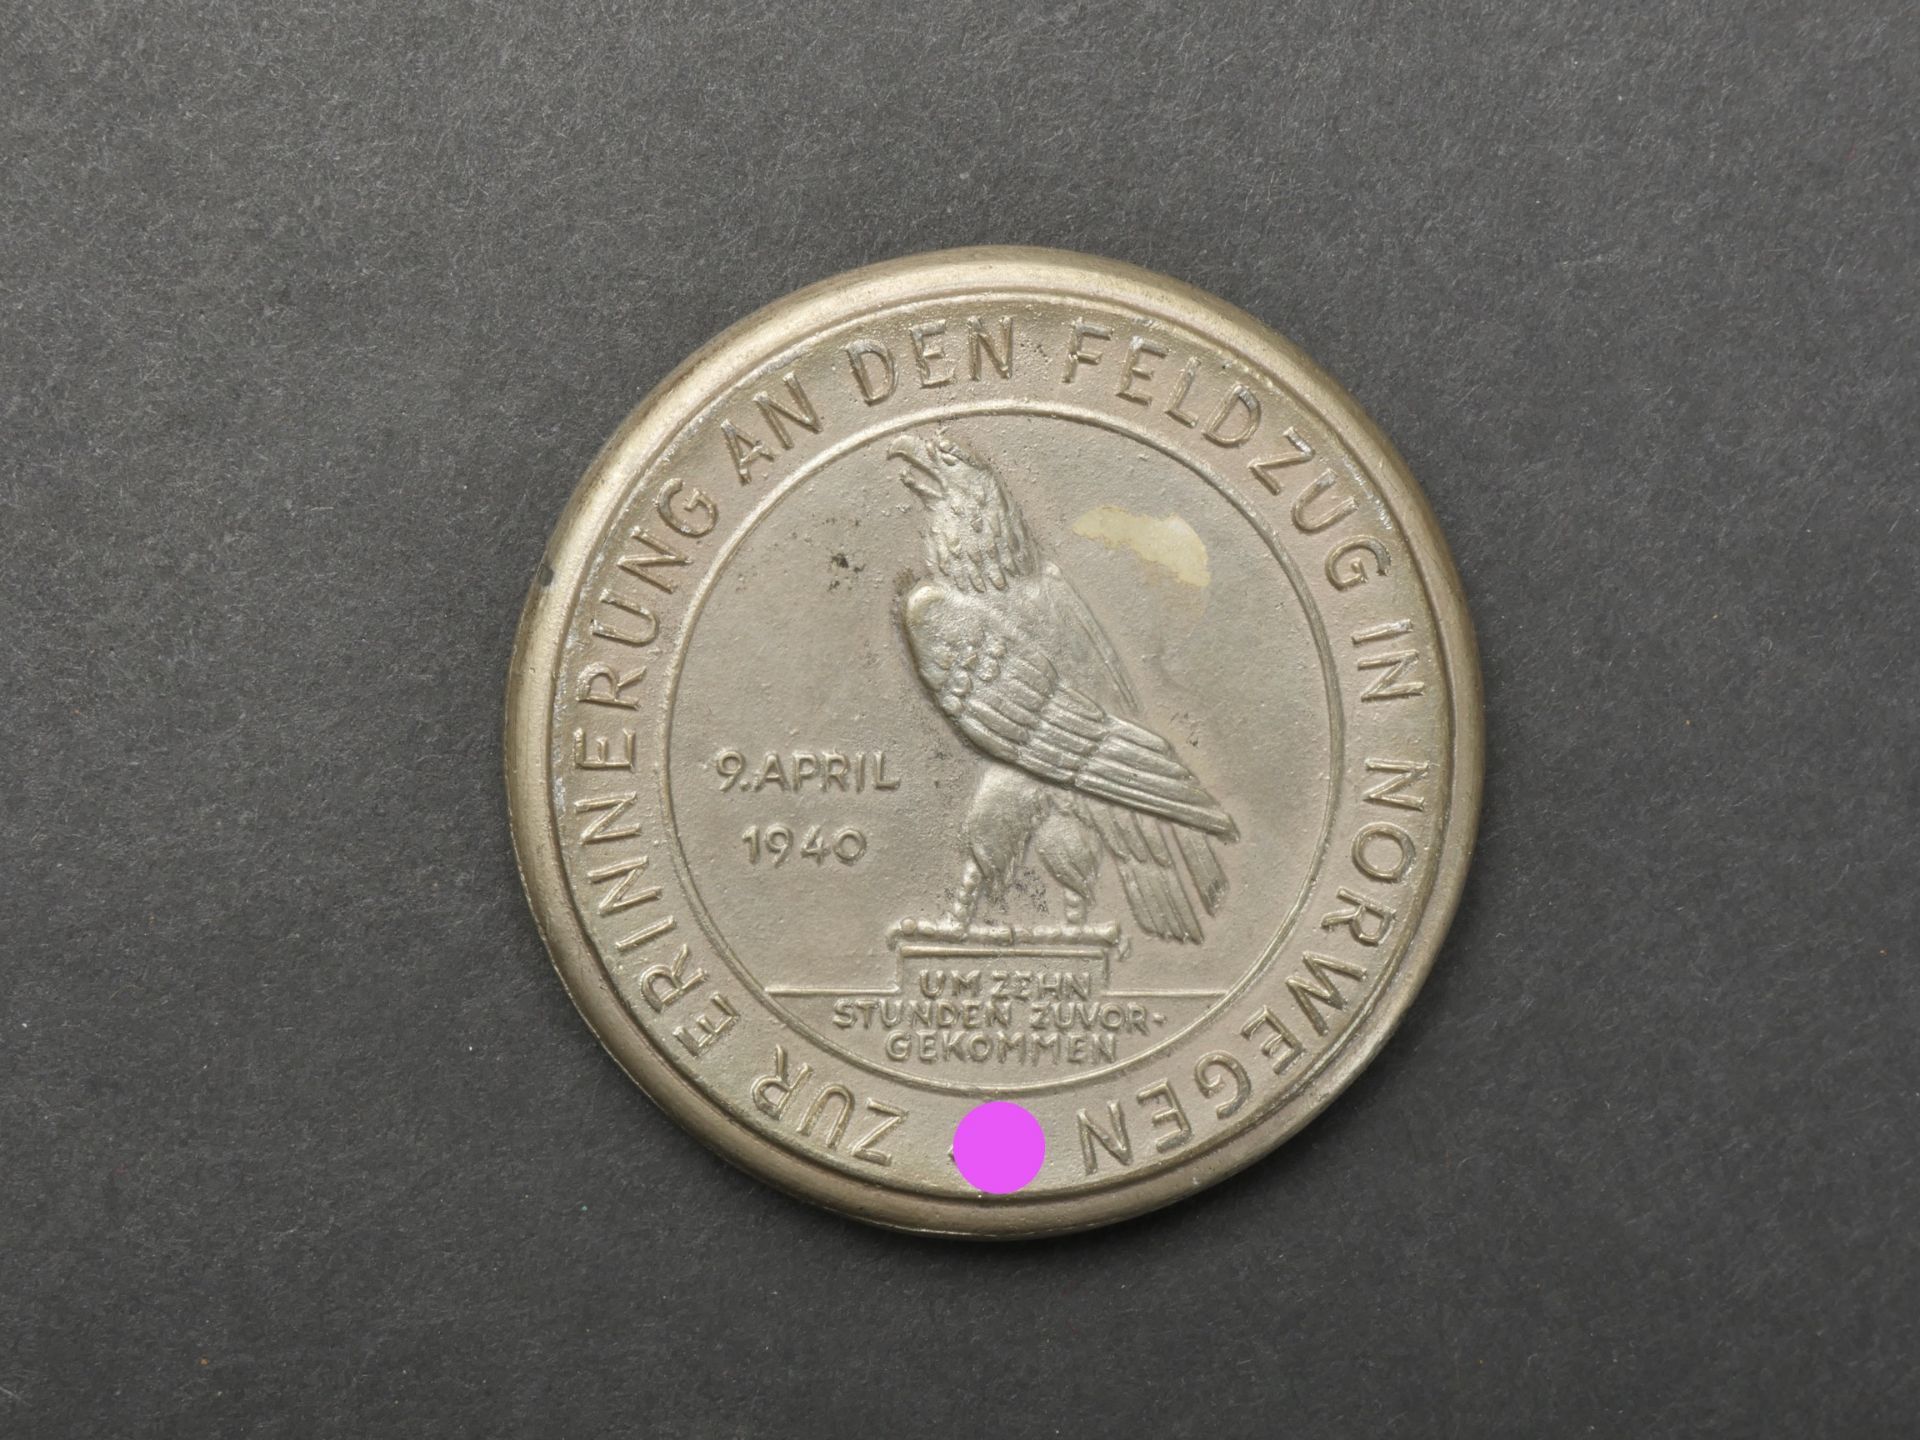 Medaille commemorative Norvege. Norway commemorative medal.